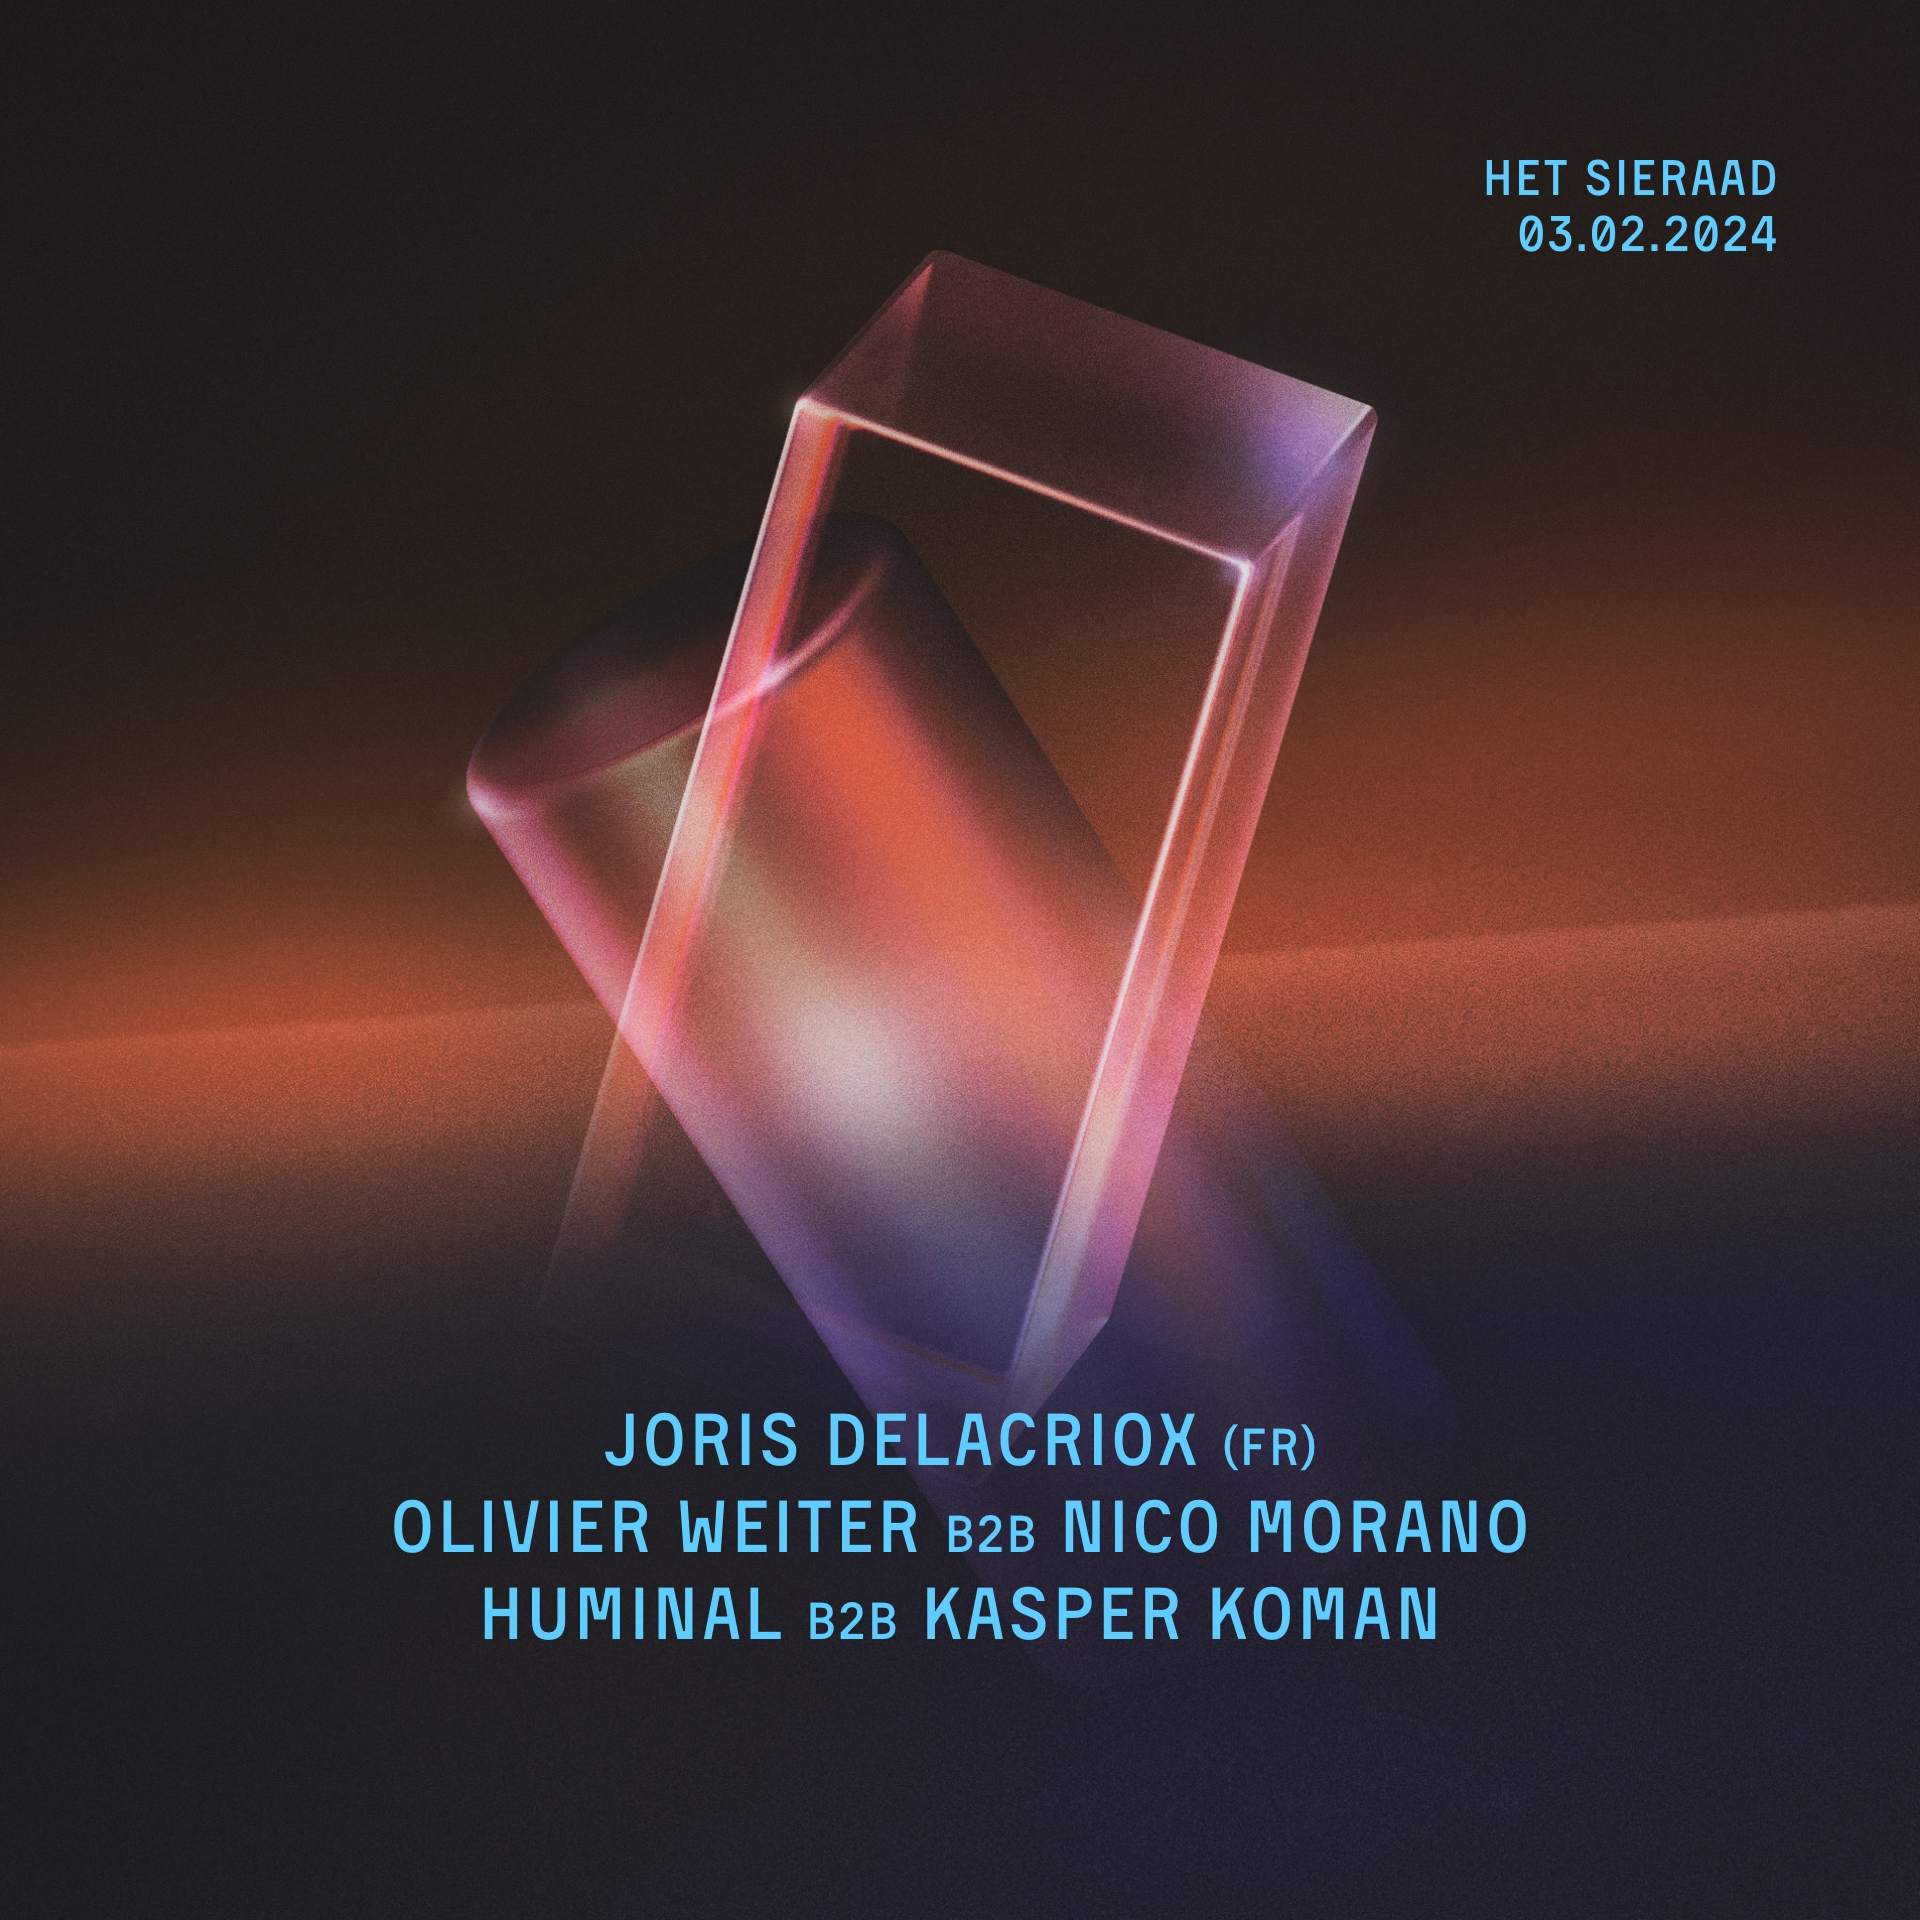 Joris Delacroix (FR) DJ set  - Olivier Weiter b2b Nico Morano - Huminal b2b Kasper Koman - フライヤー表